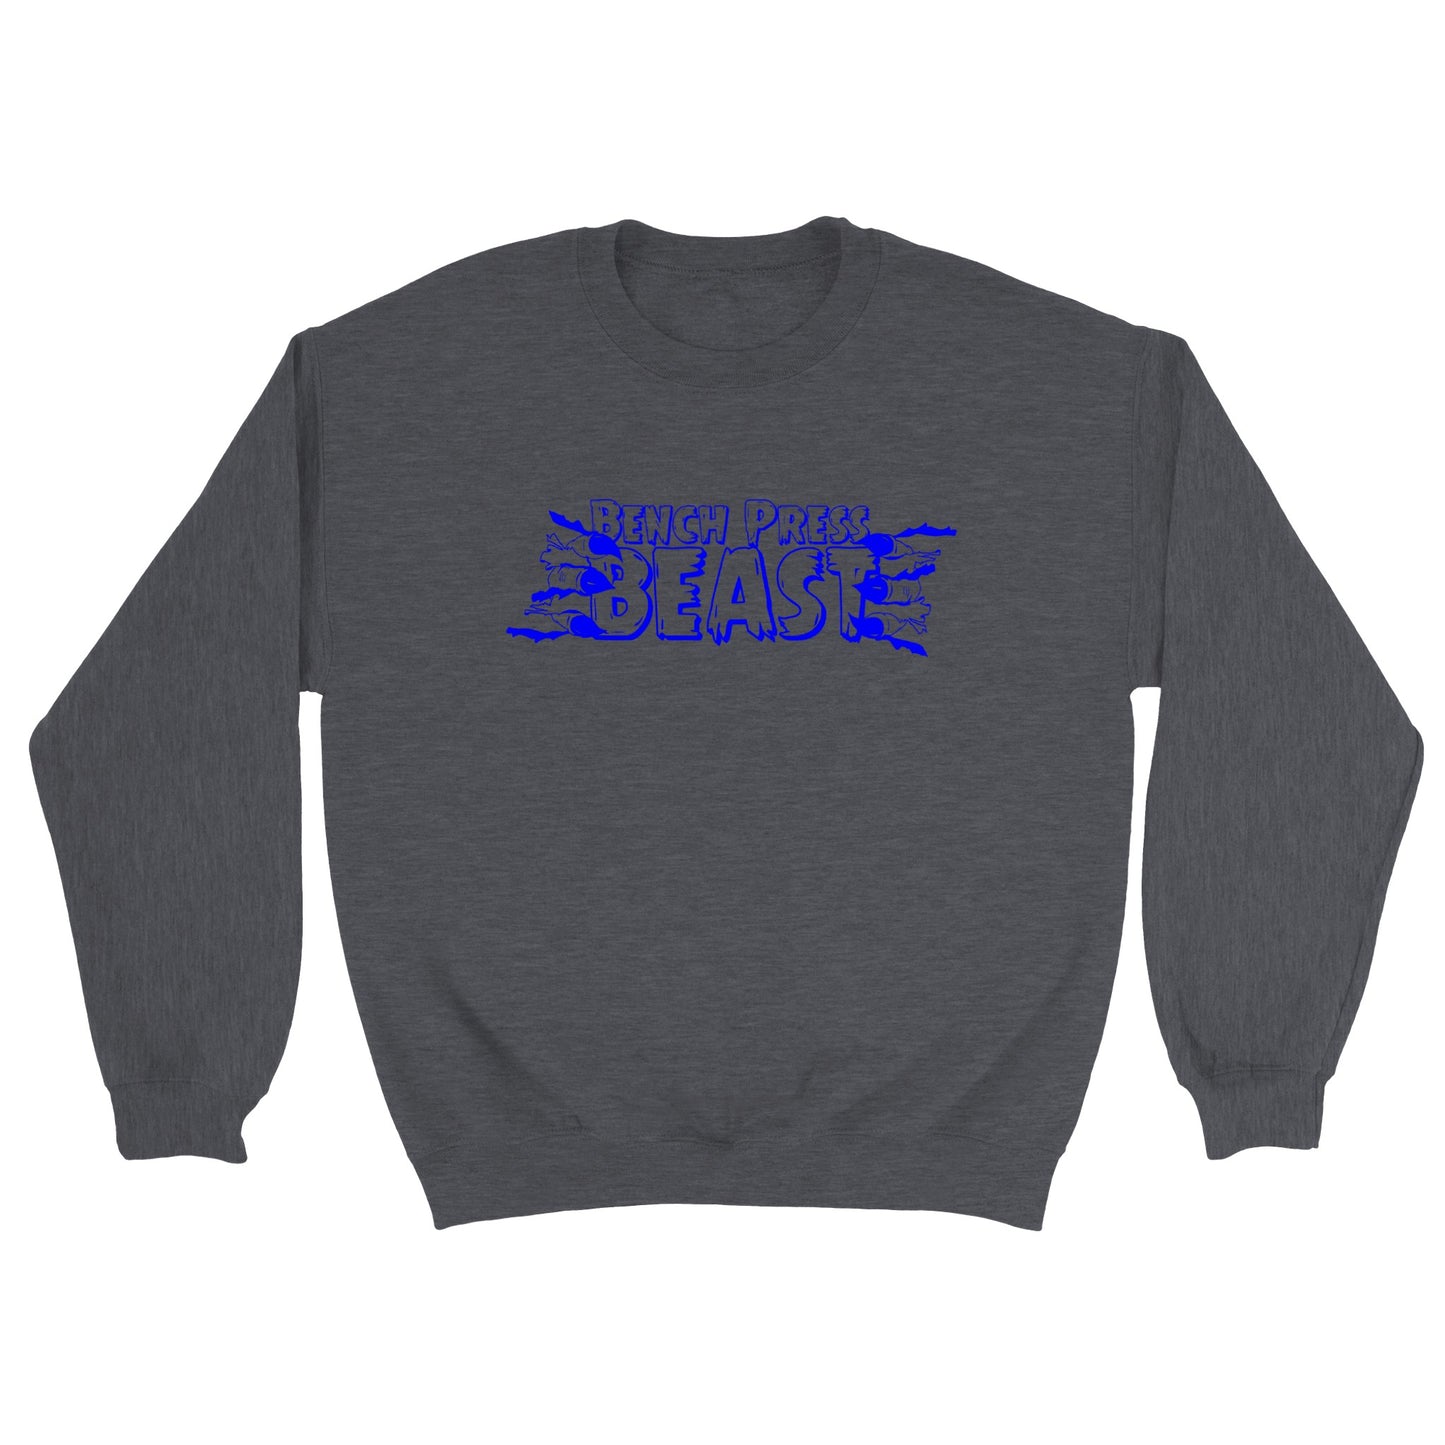 Bench Press Beast Sweatshirt